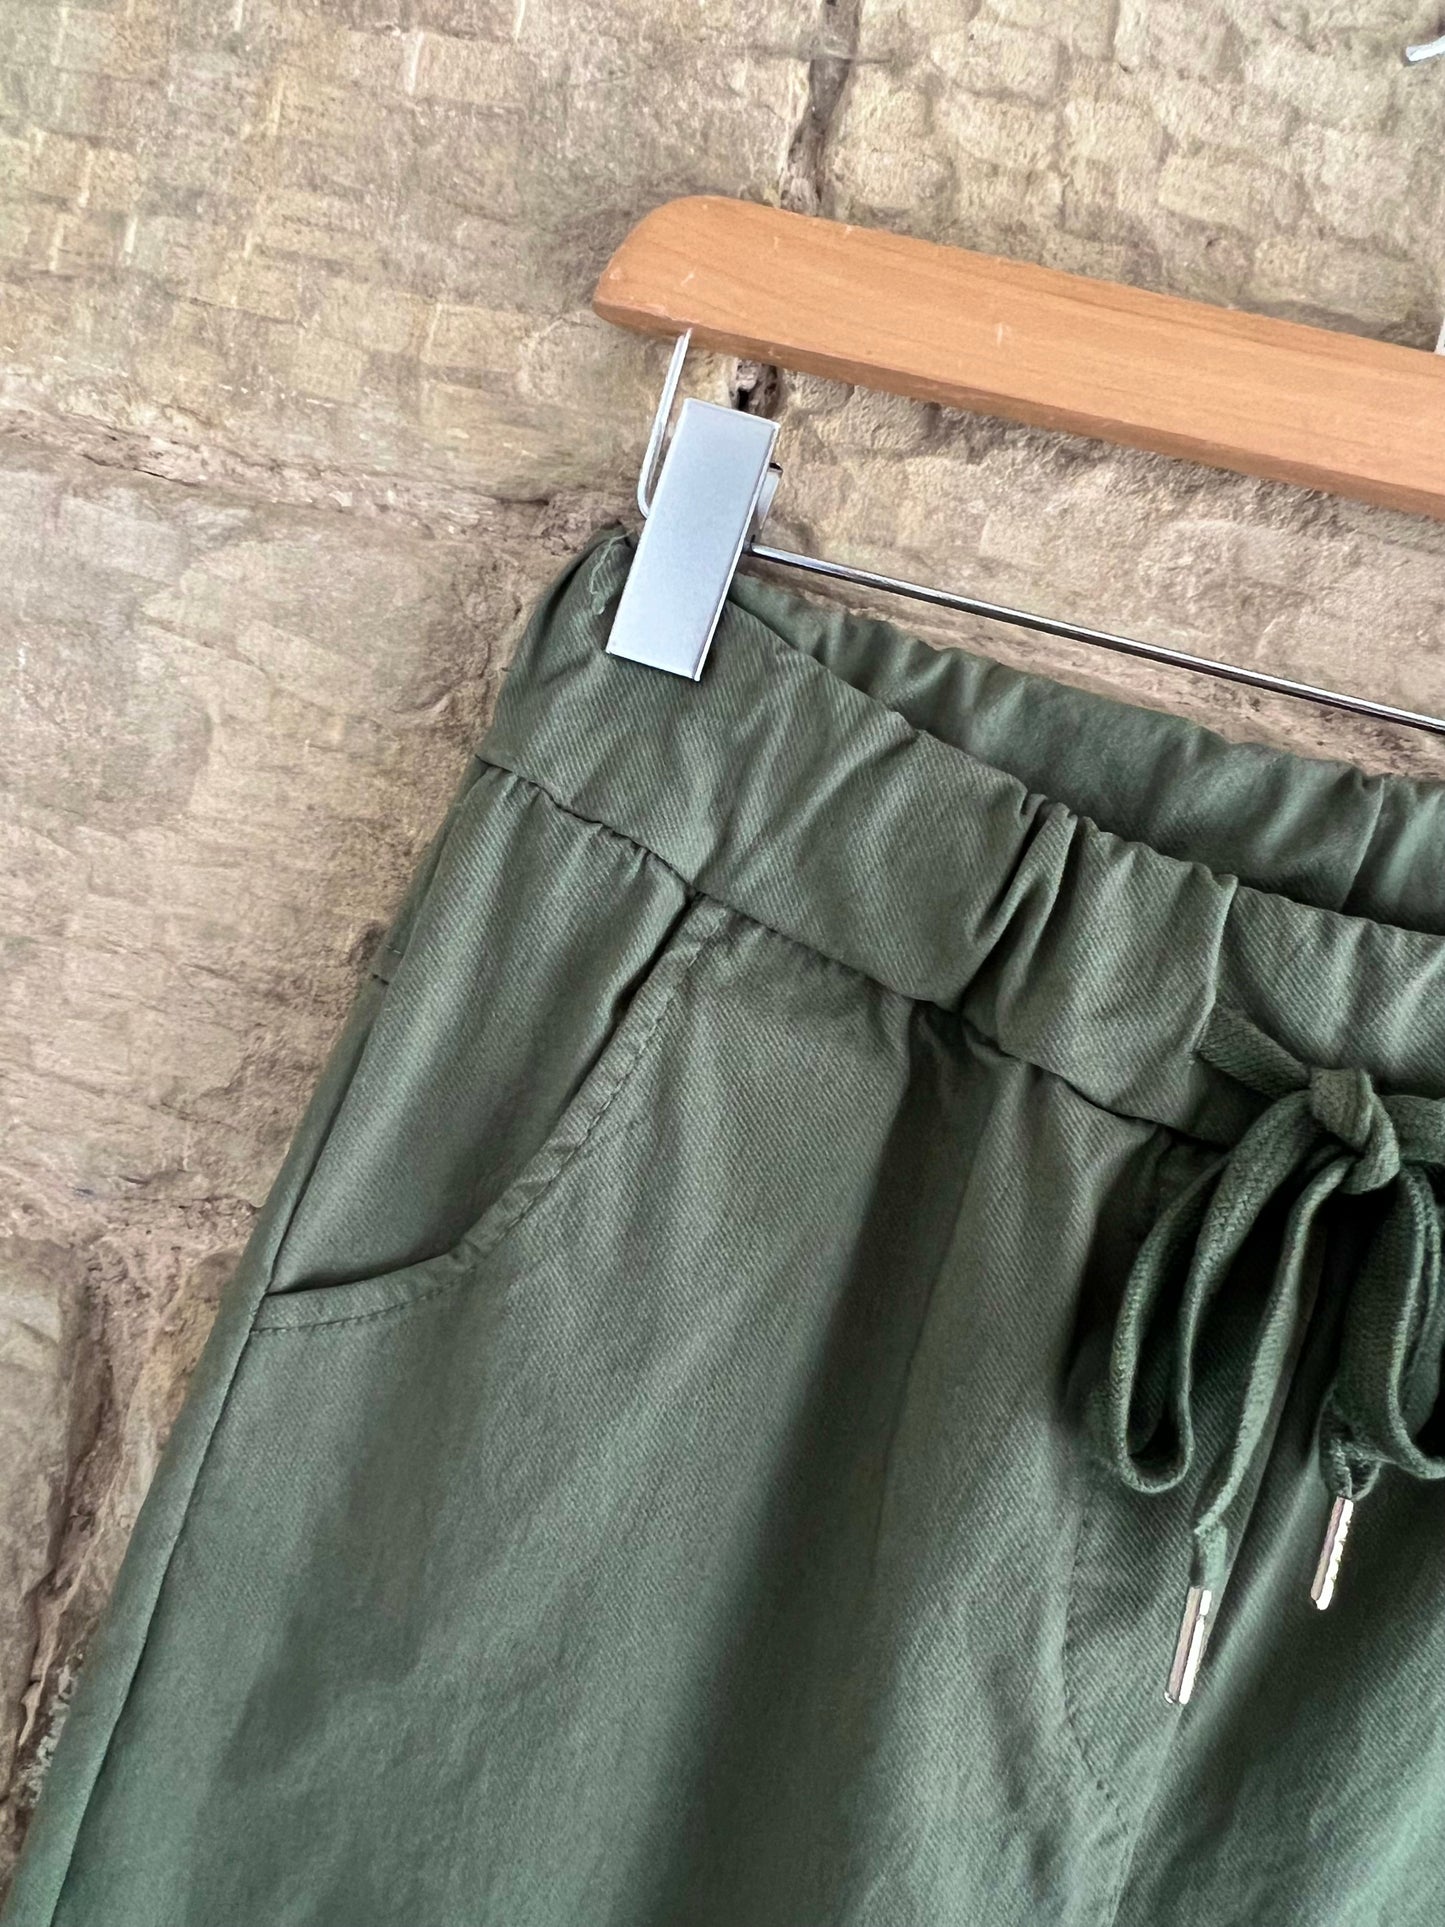 SMOOTH Magic Trousers - WRINKLE FREE - 2 Sizes - Khaki